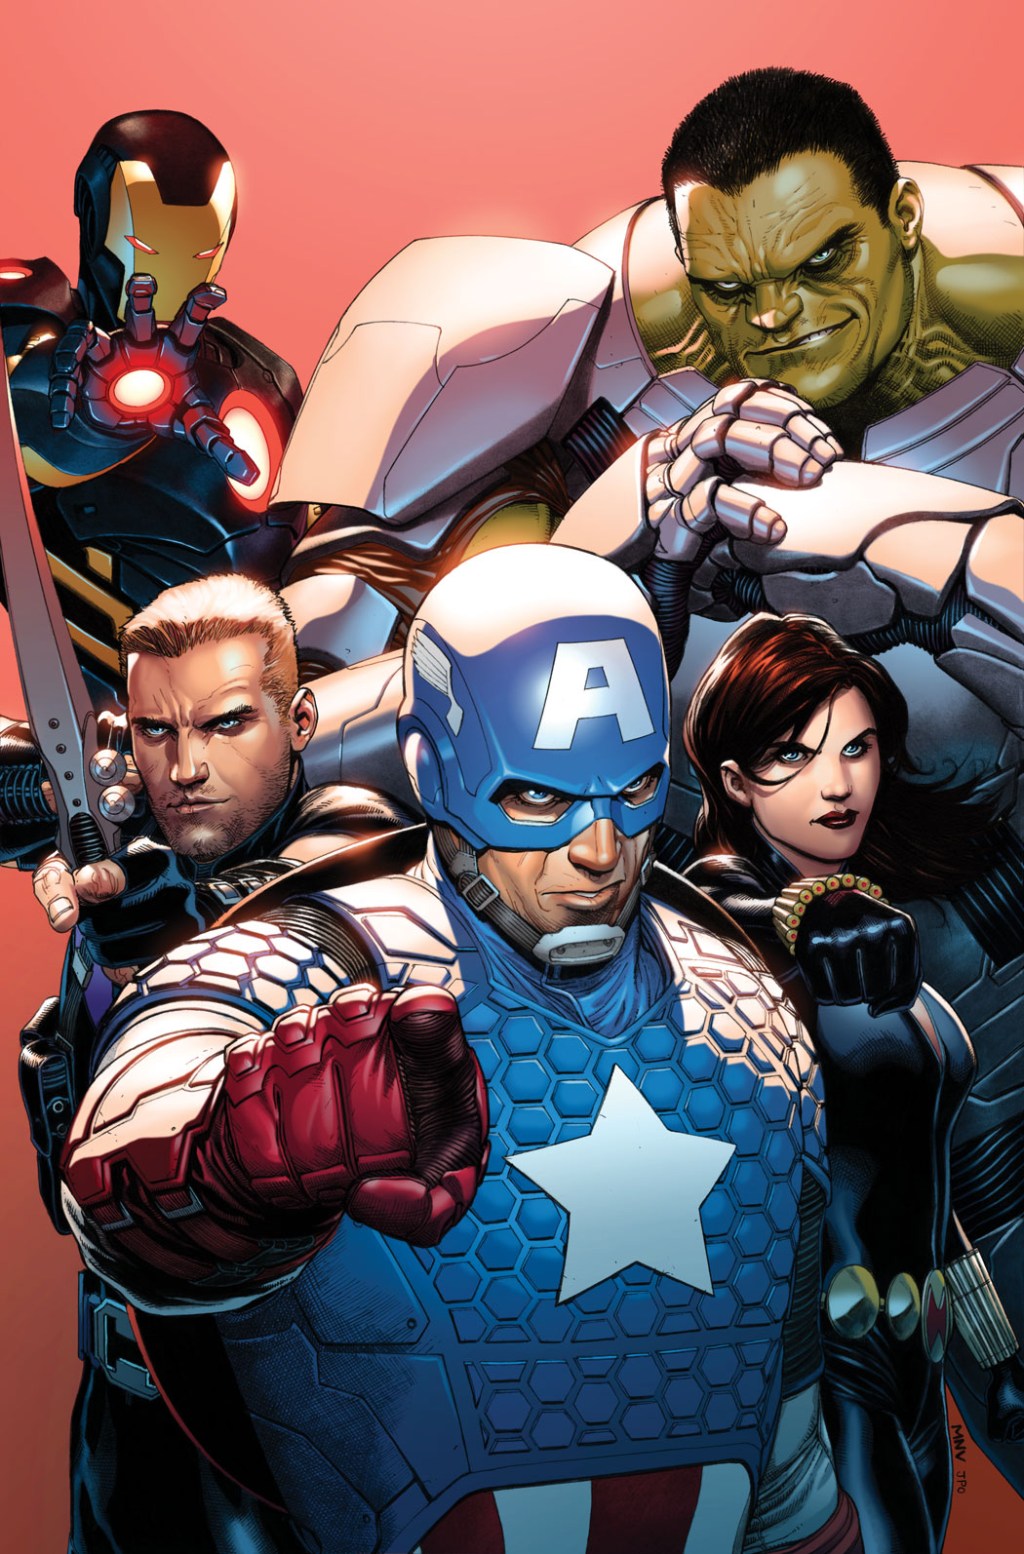 The Avengers being their recruitment drive on Steve McNiven's variant cover to Avengers Vol. 5 #1 "The Avengers: Avengers World" (2012), Marvel Comics